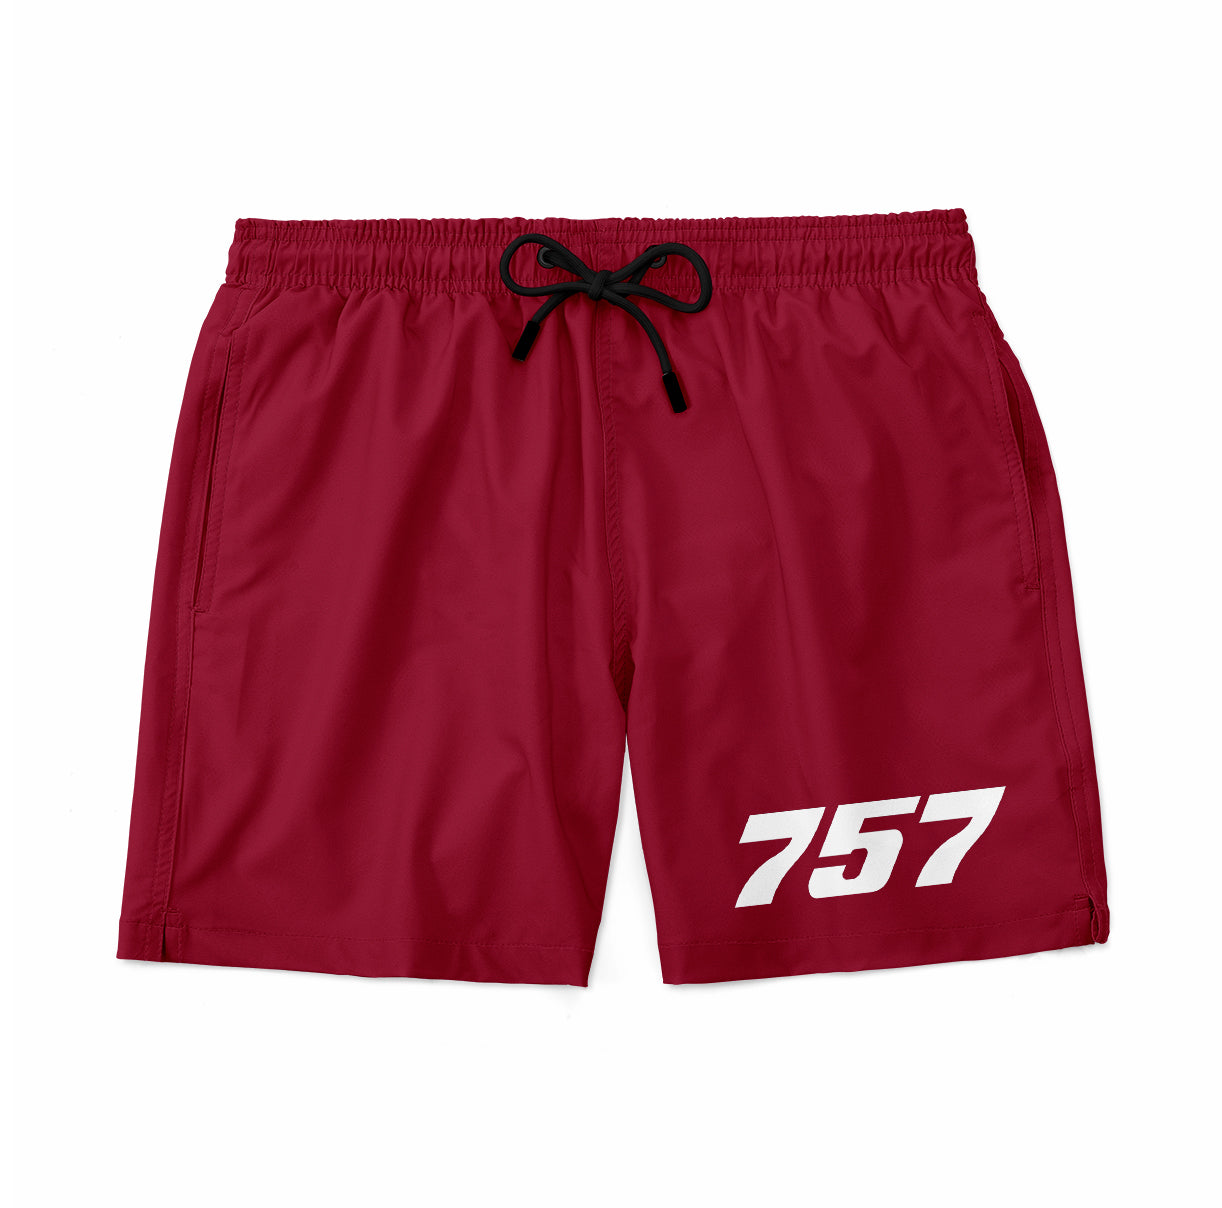 757 Flat Text Designed Swim Trunks & Shorts